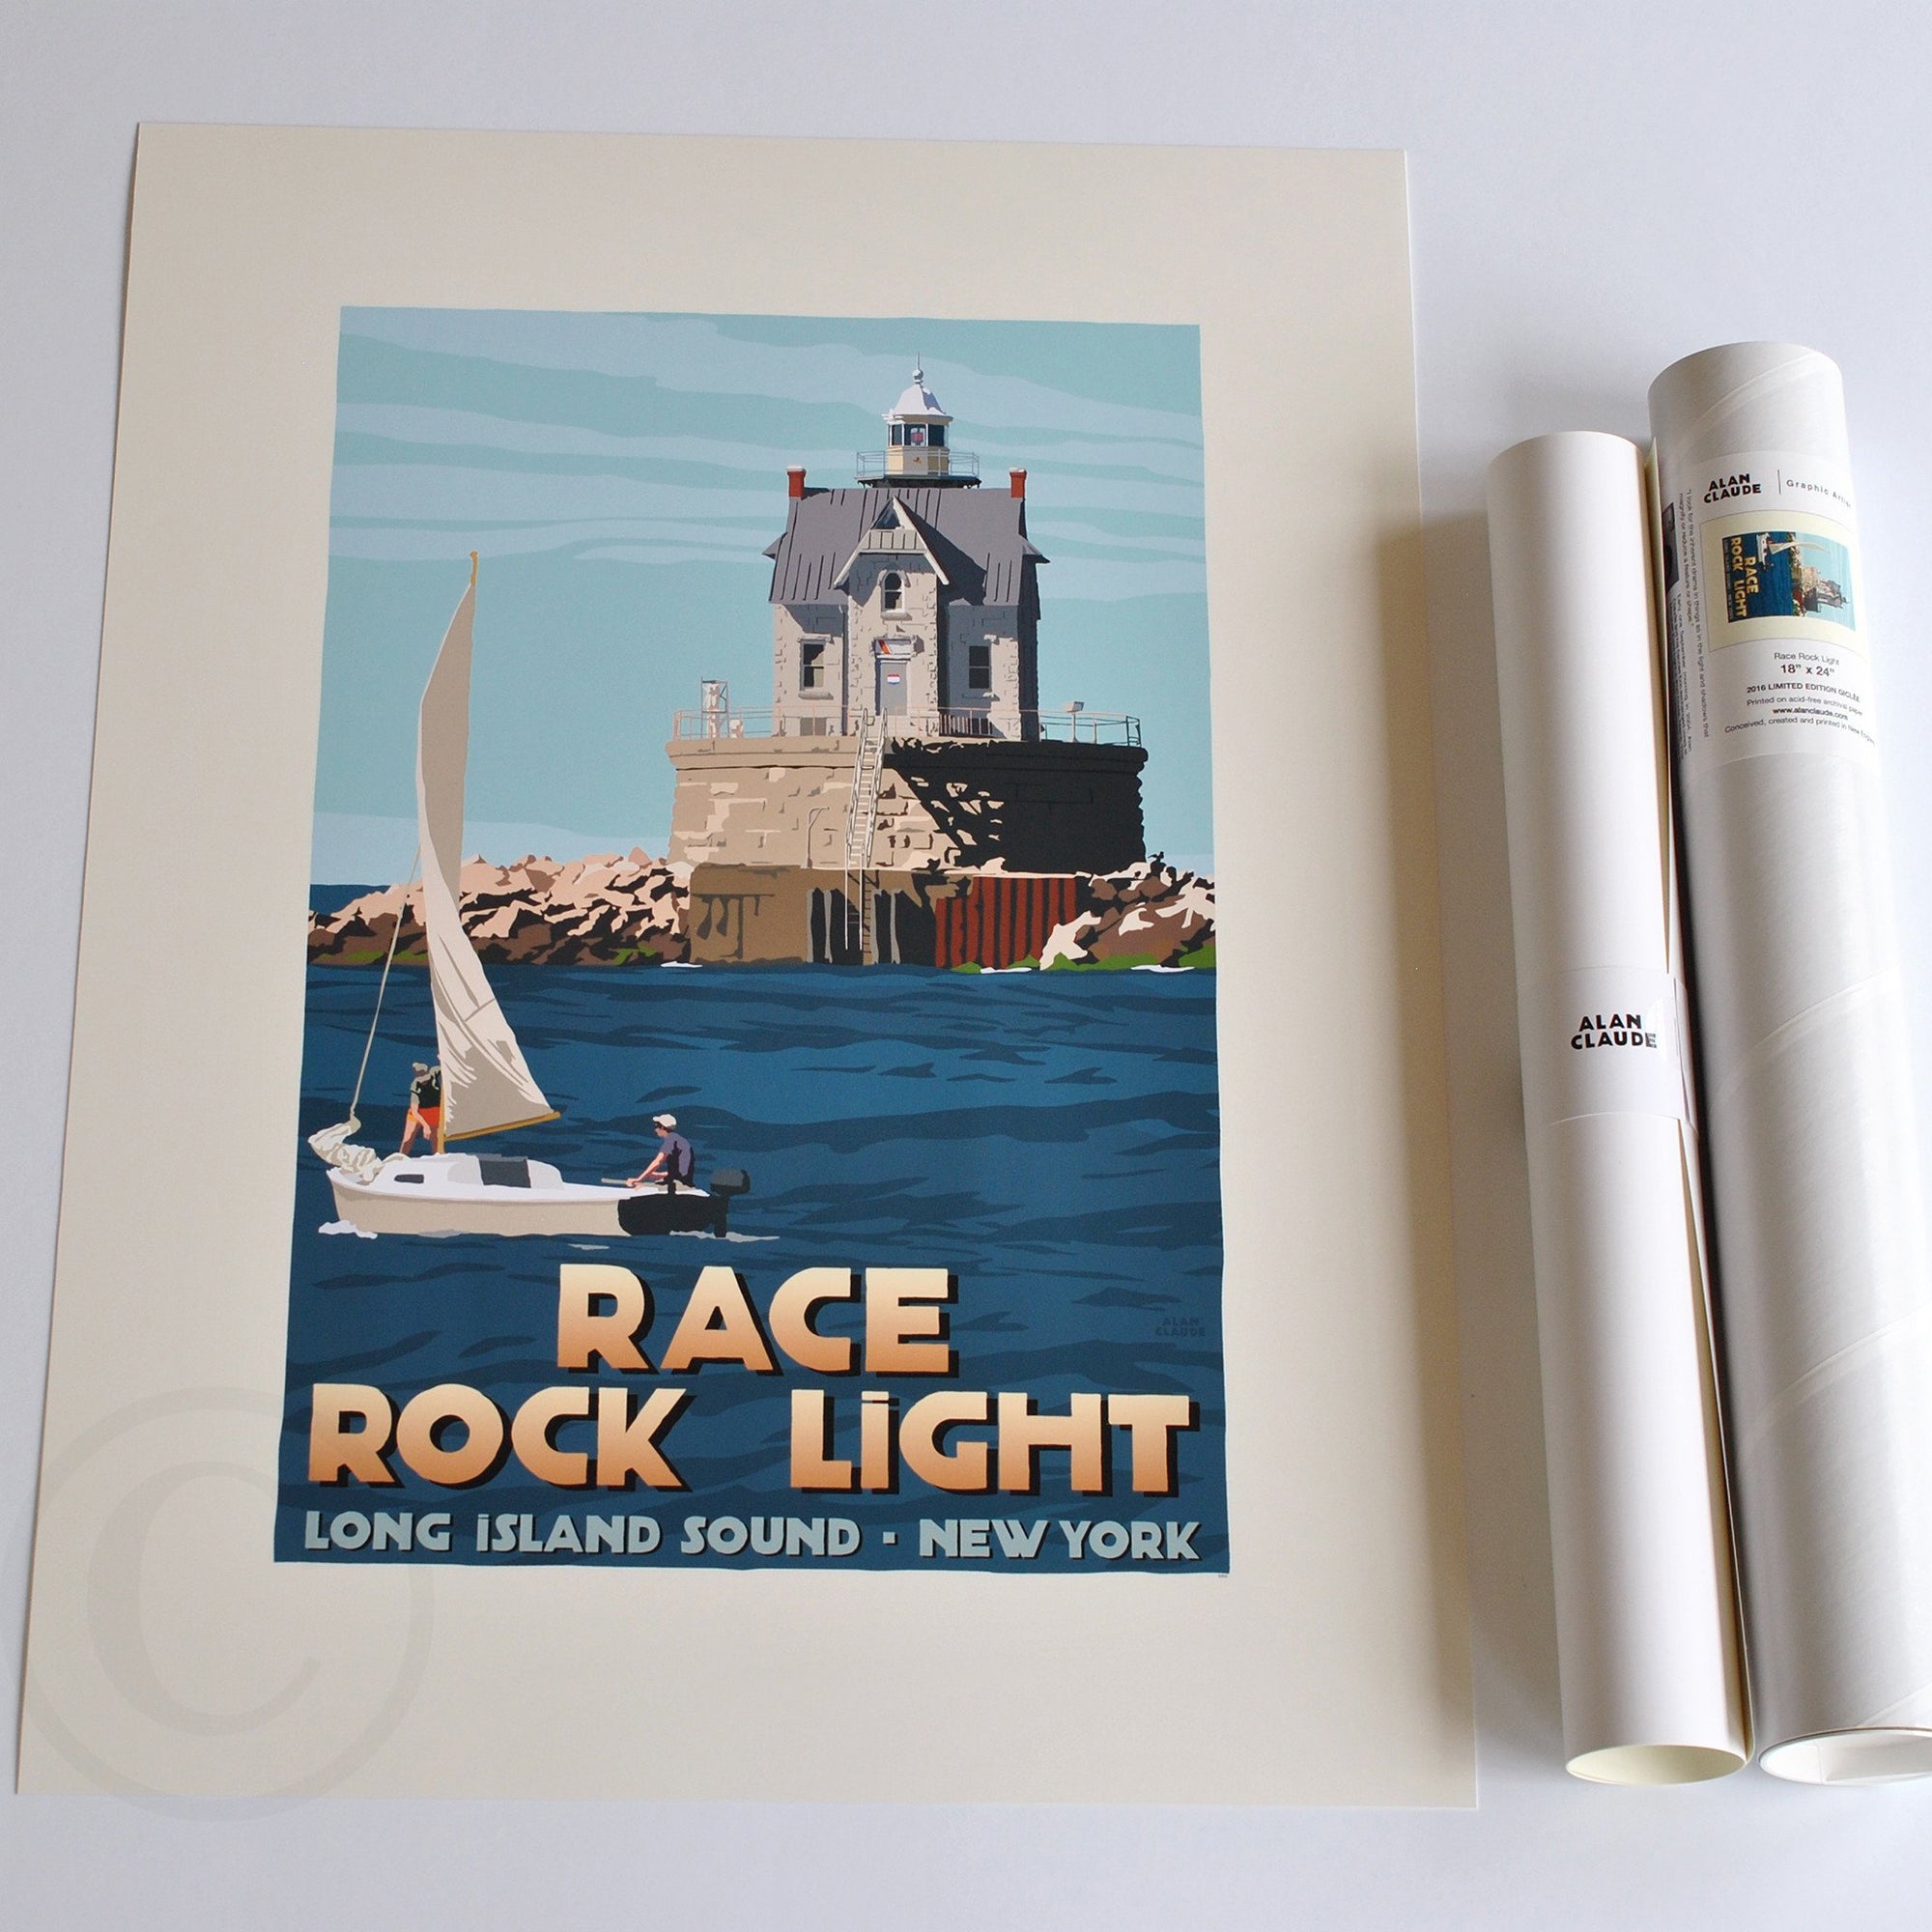 Race Rock Light Art Print 18" x 24" Travel Poster By Alan Claude - New York